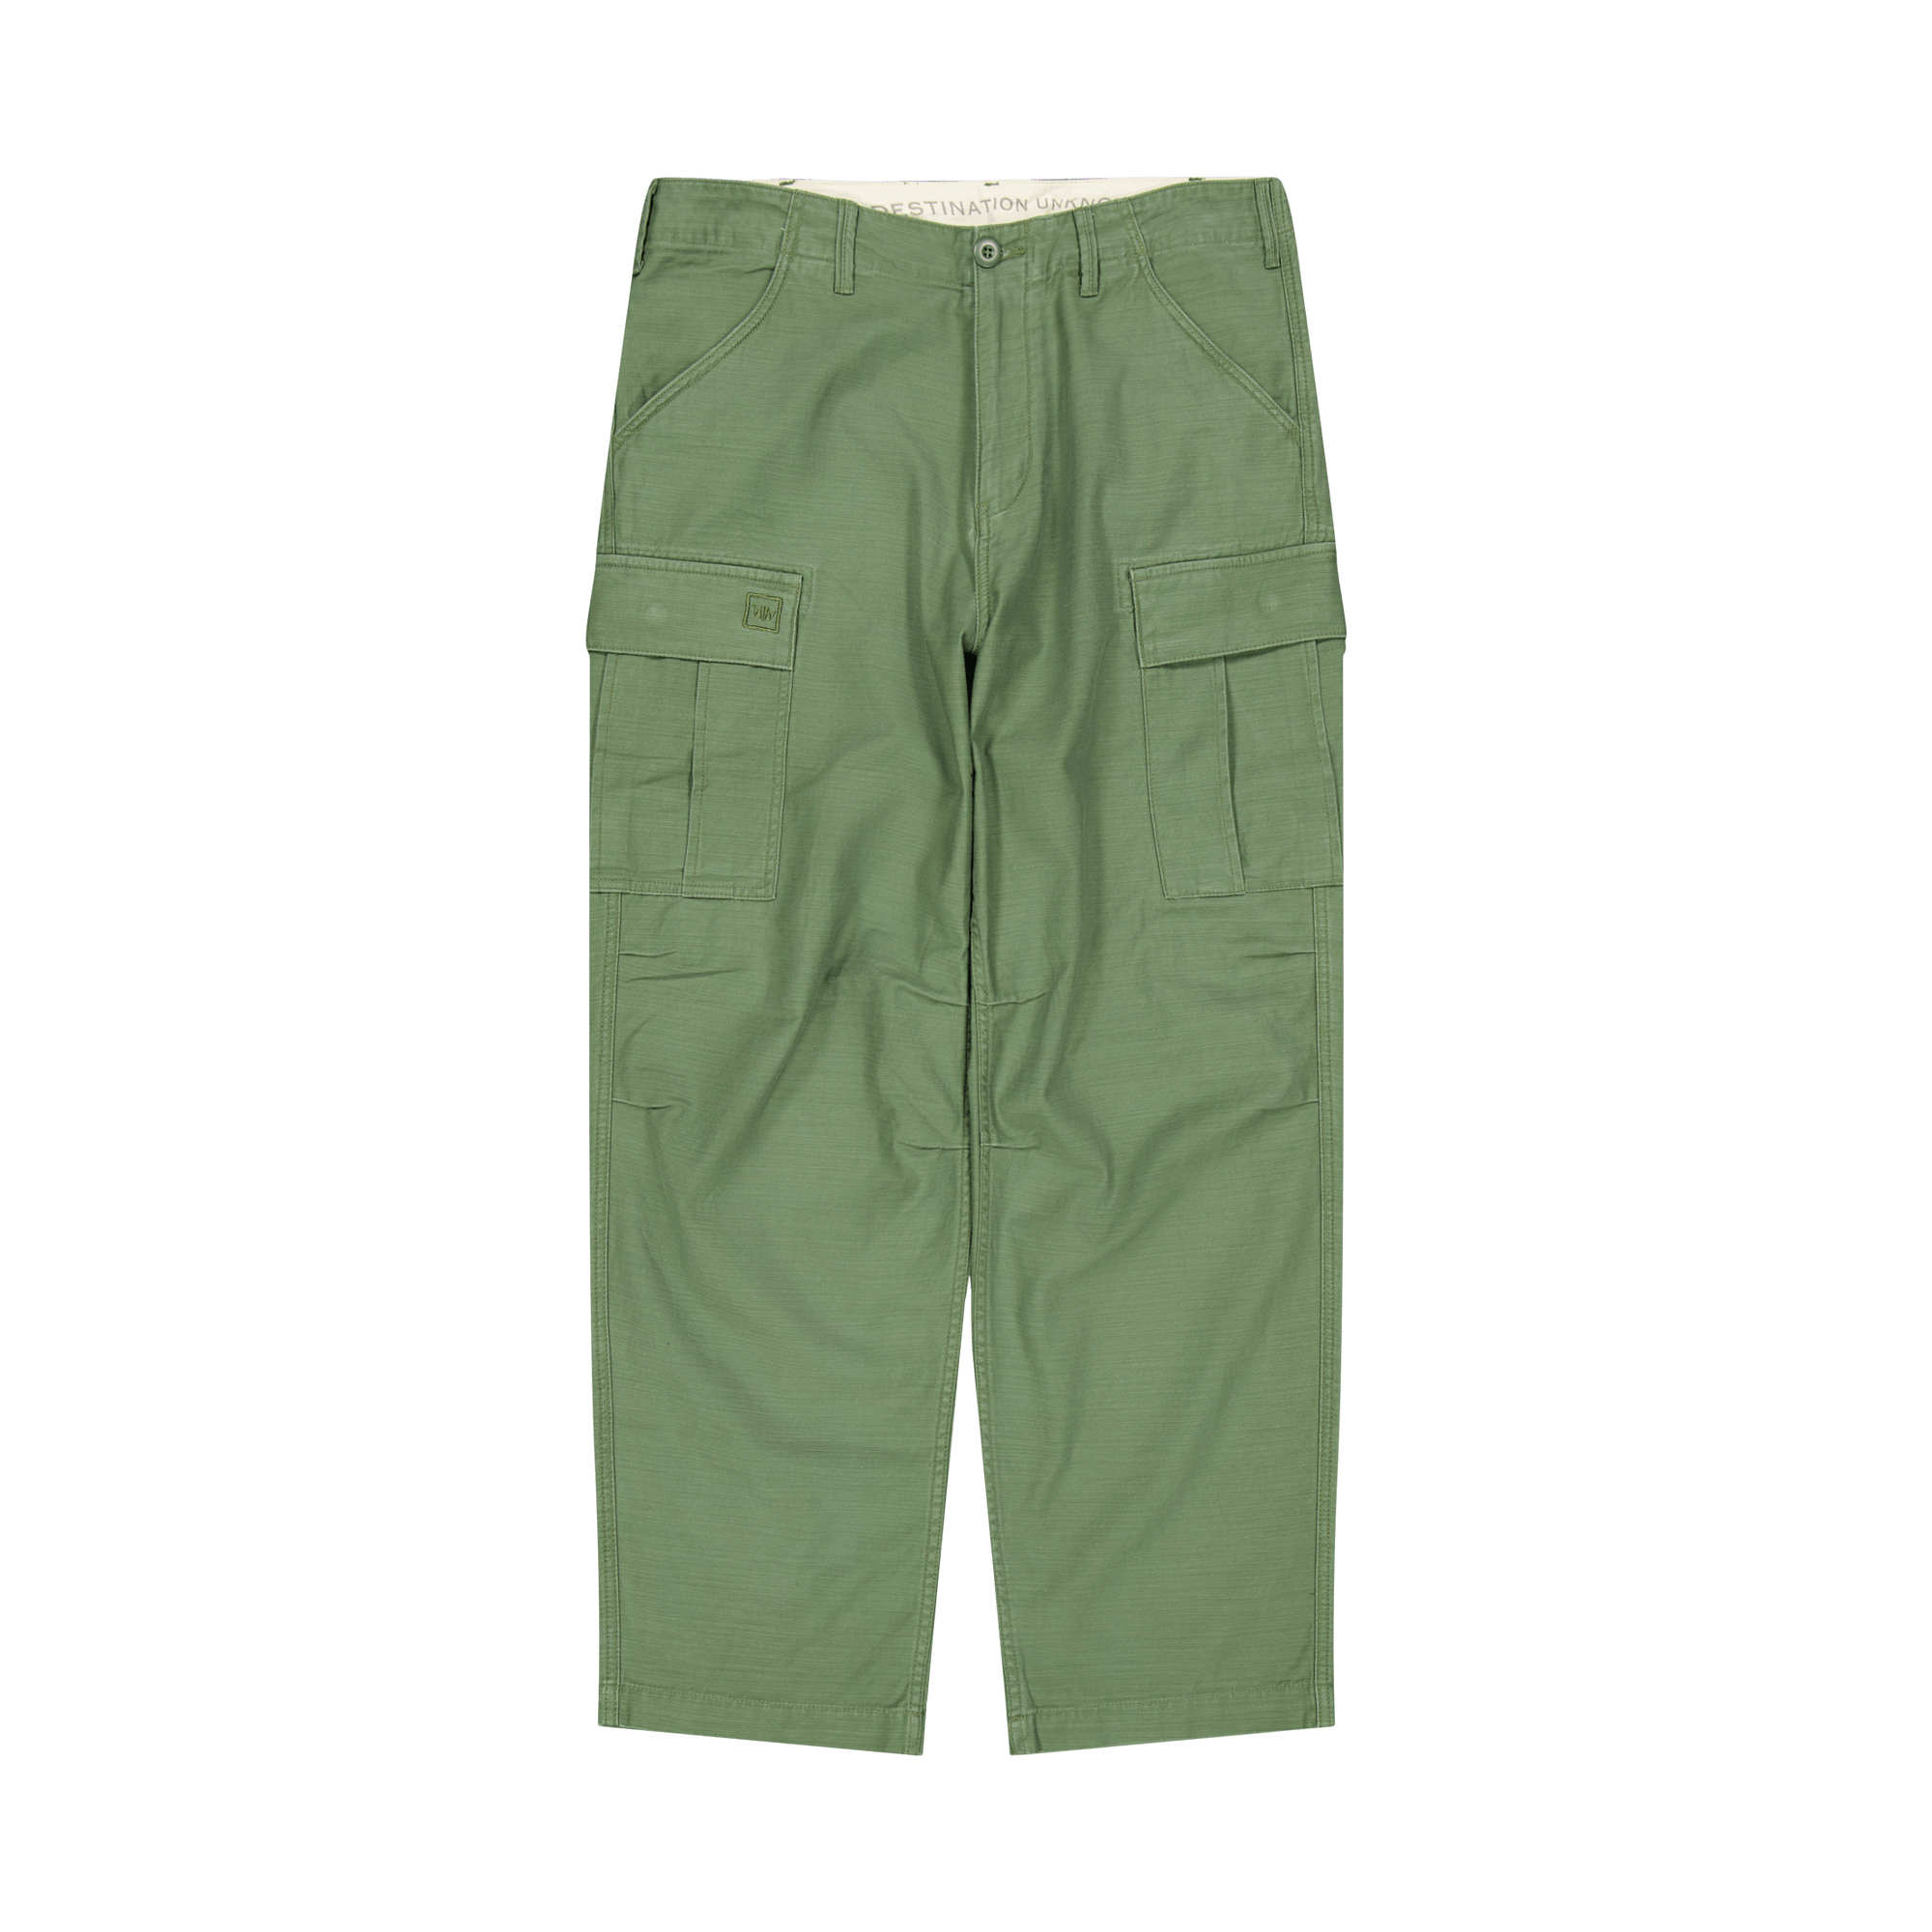 6 Pocket Army Pants Olive